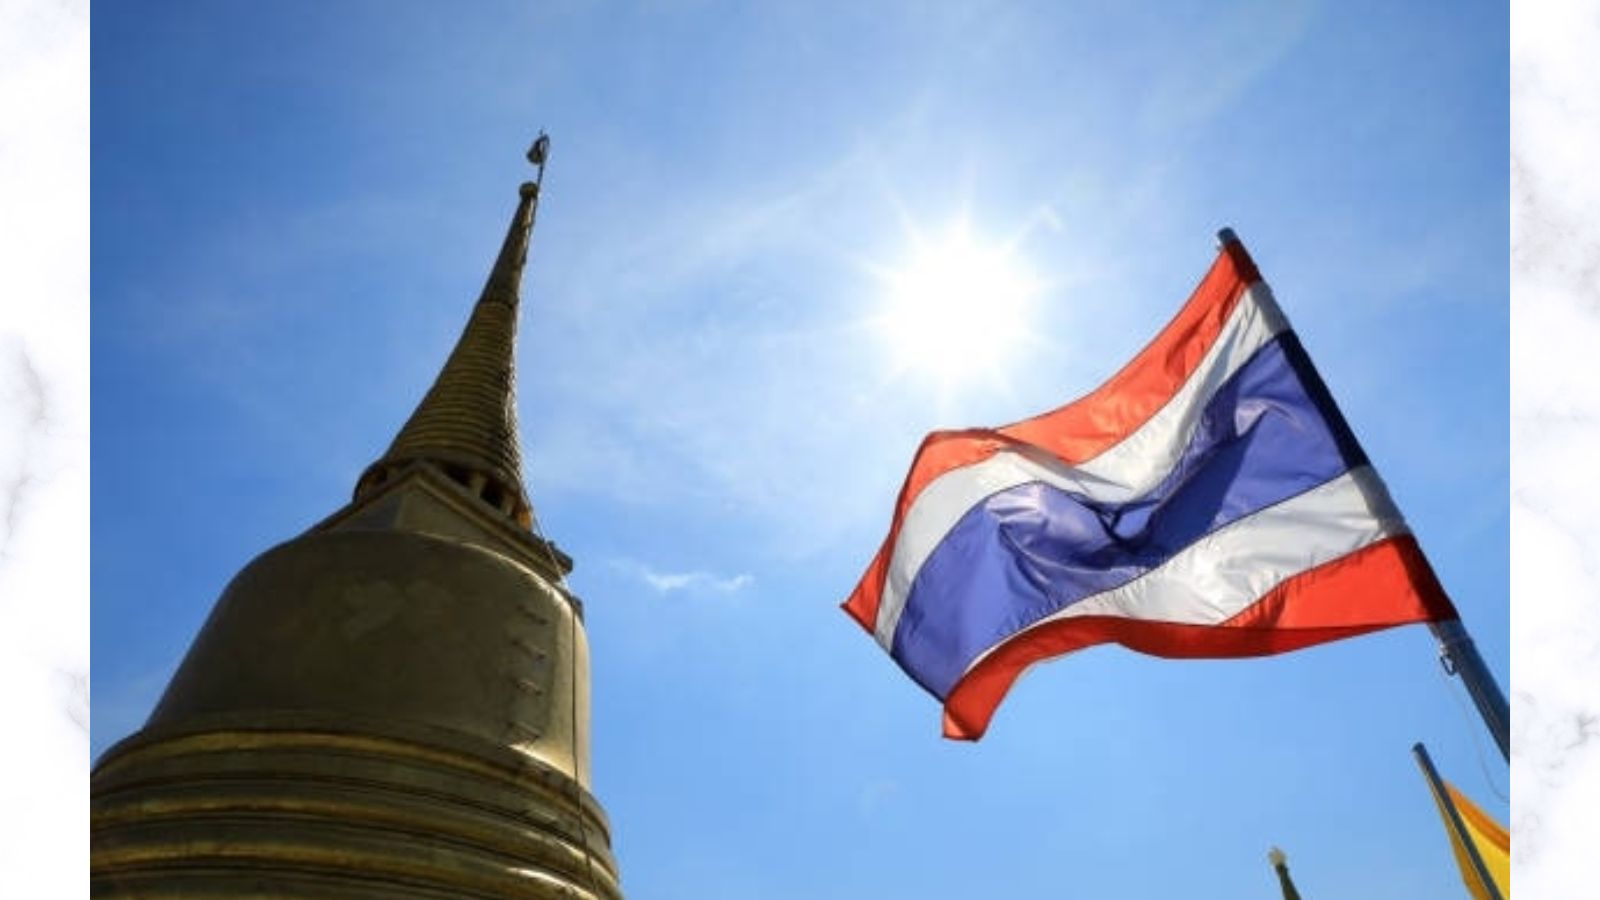 Thailand's Constitution Day